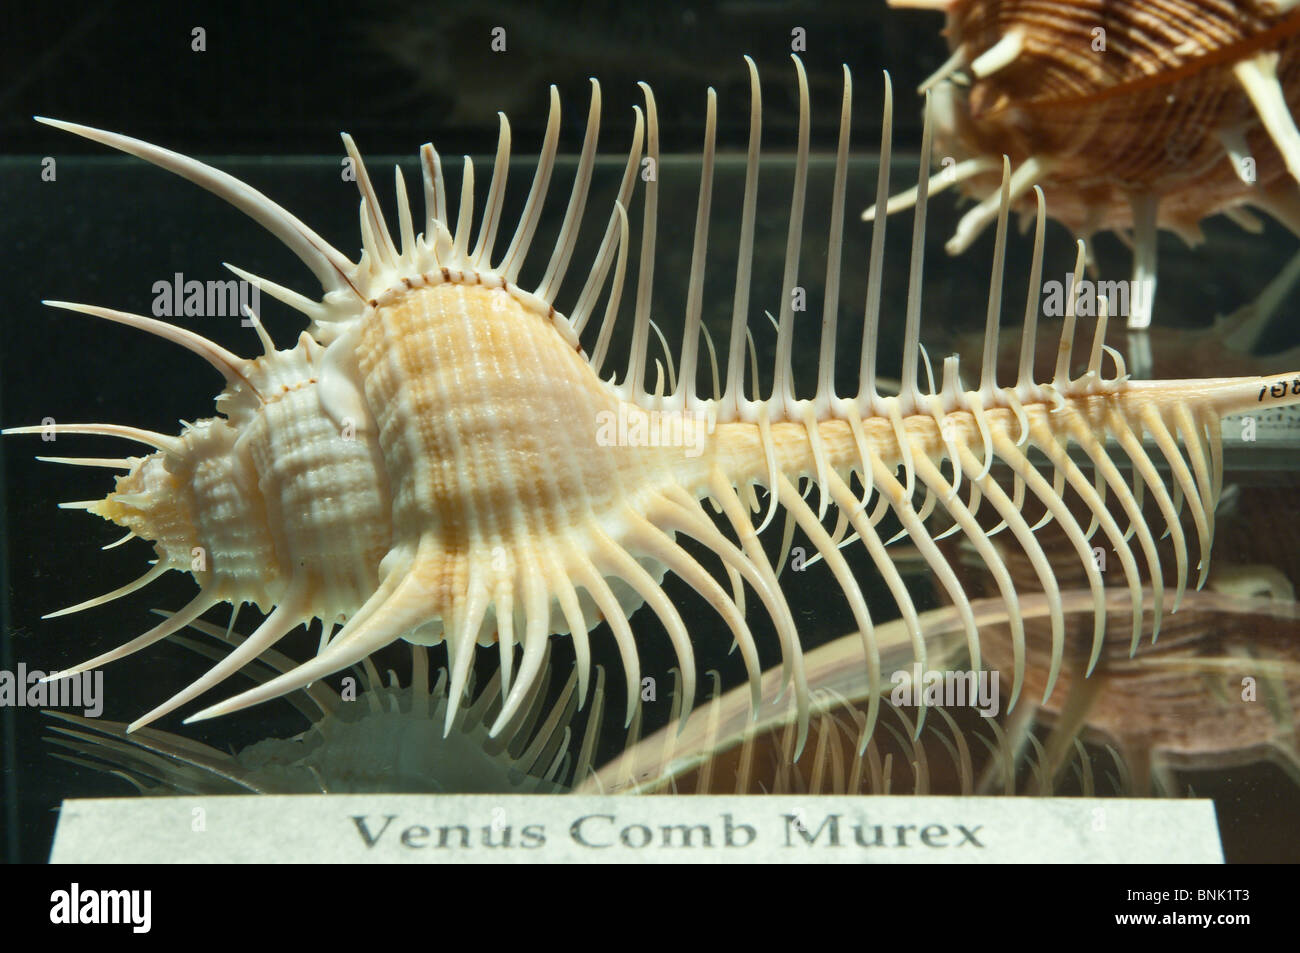 Texas, Corpus Christi. Venus comb murex shells at the Corpus Christi Museum. Stock Photo